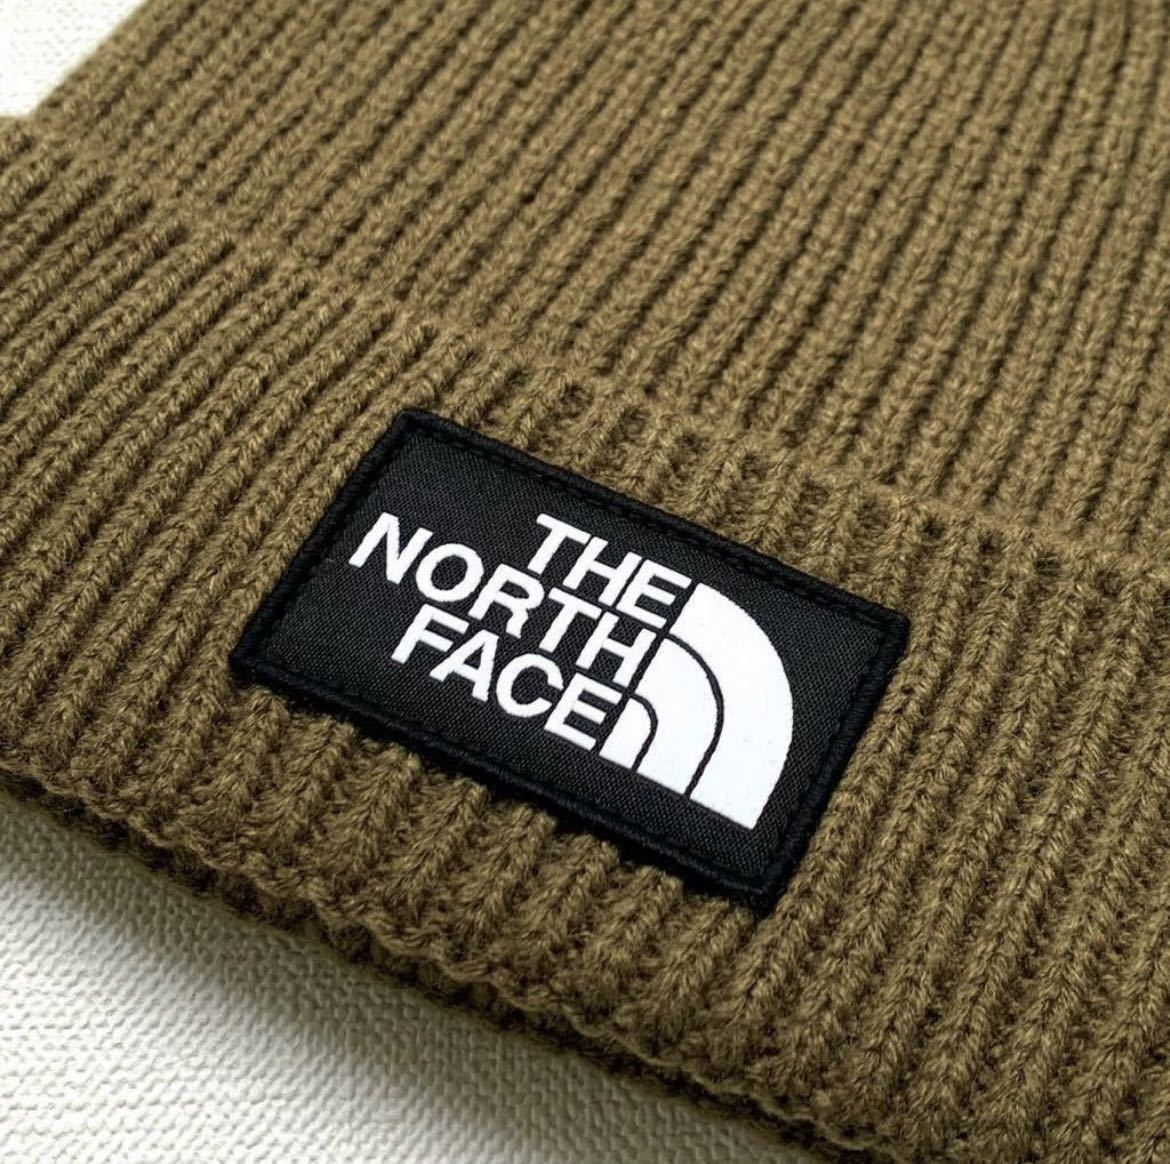 THE NORTH FACE The North Face вязаная шапка Beanie вязаная шапка Beanie для мужчин и женщин шляпа колпак за границей стандартный товар хаки оливковый 